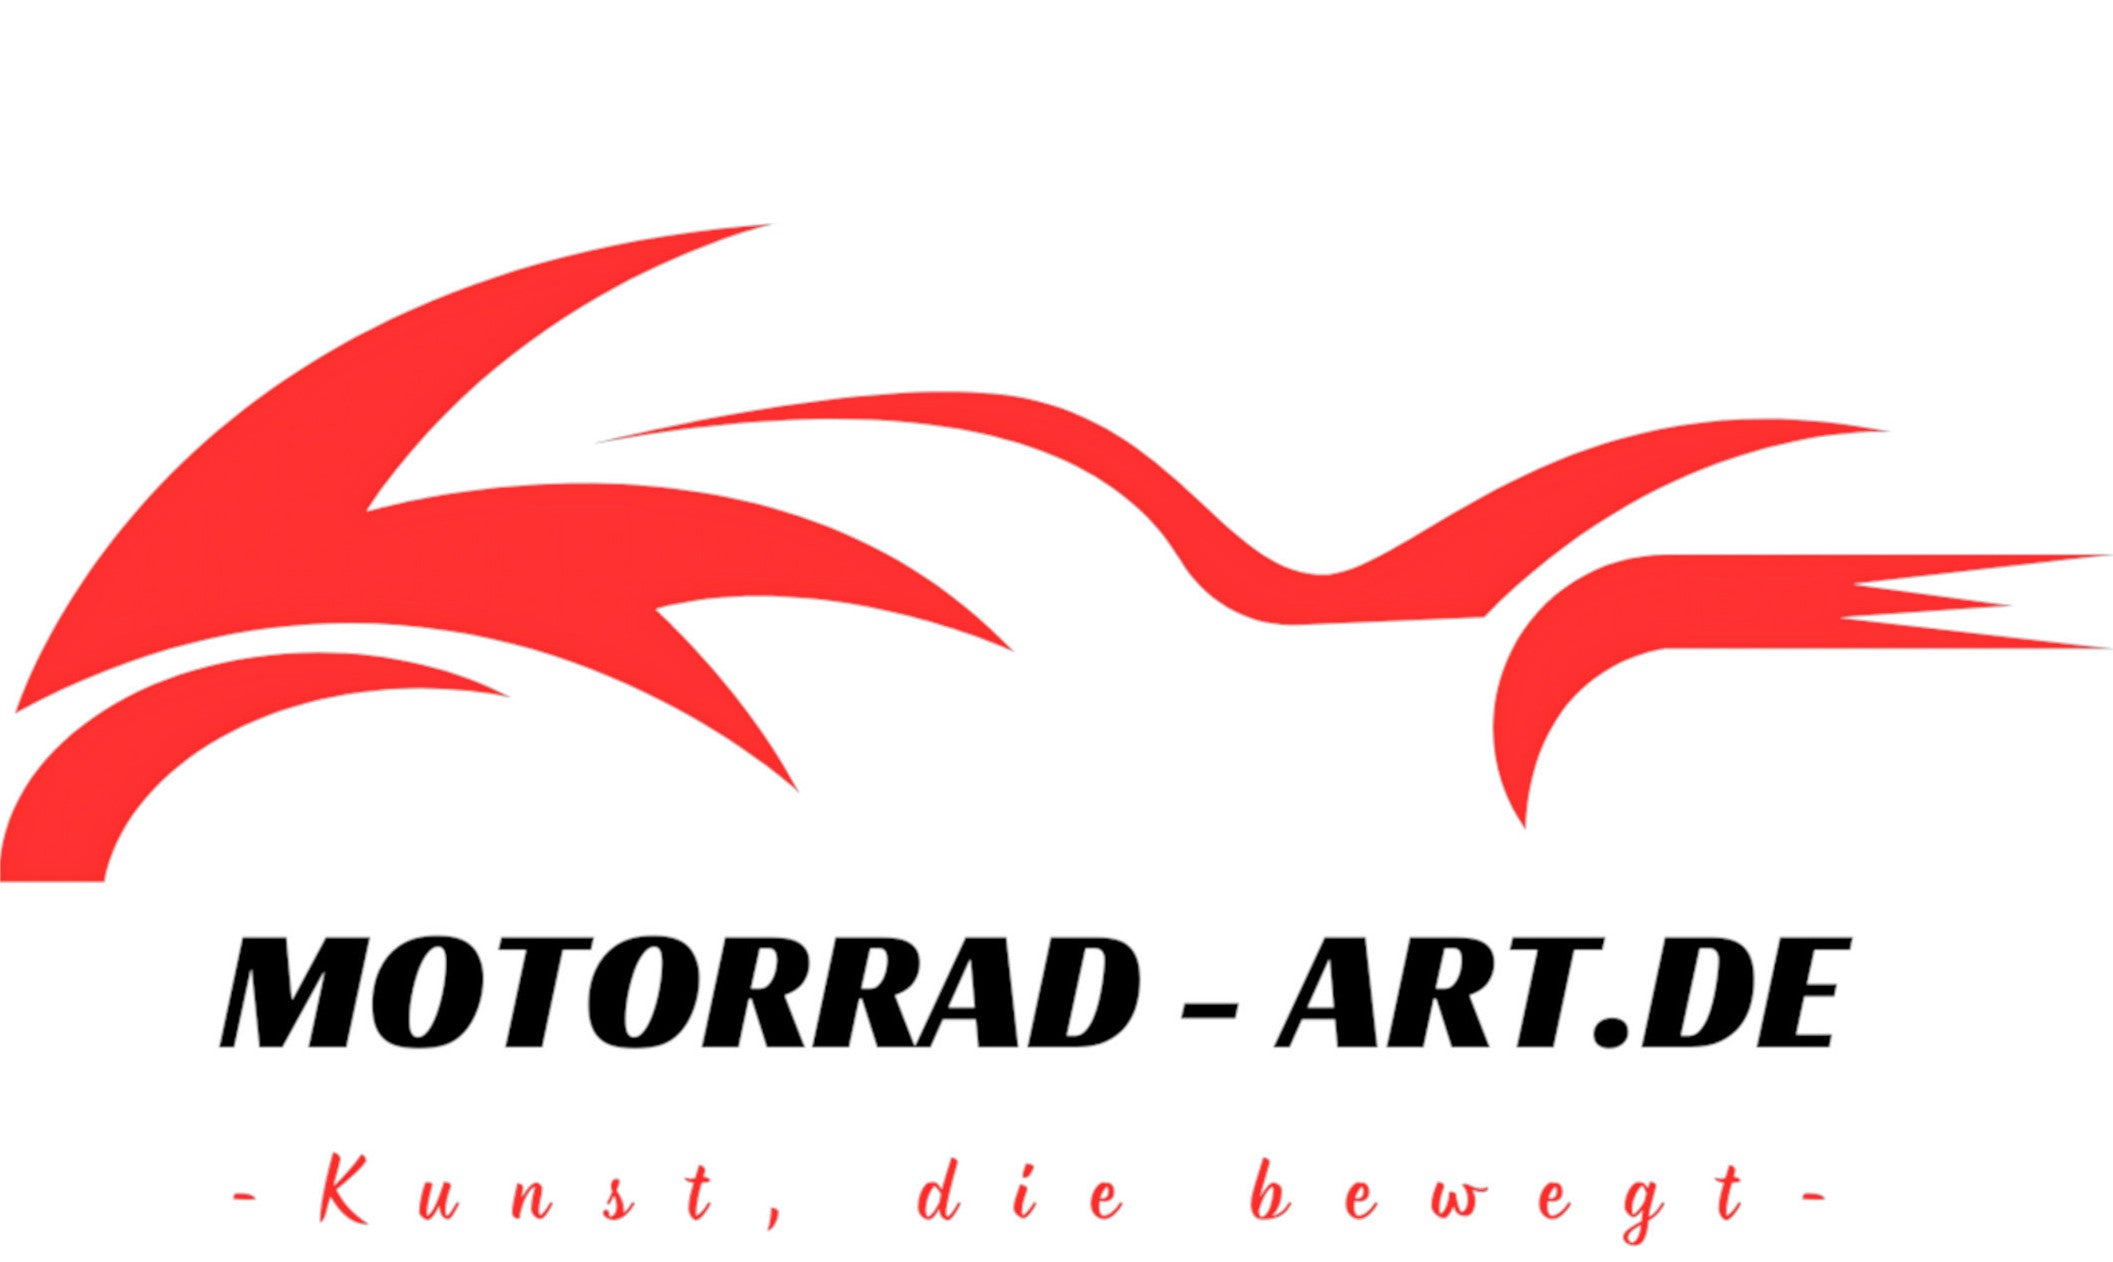 Rotes Motorrad Logo von Motorrad Art, Kunst die bewegt